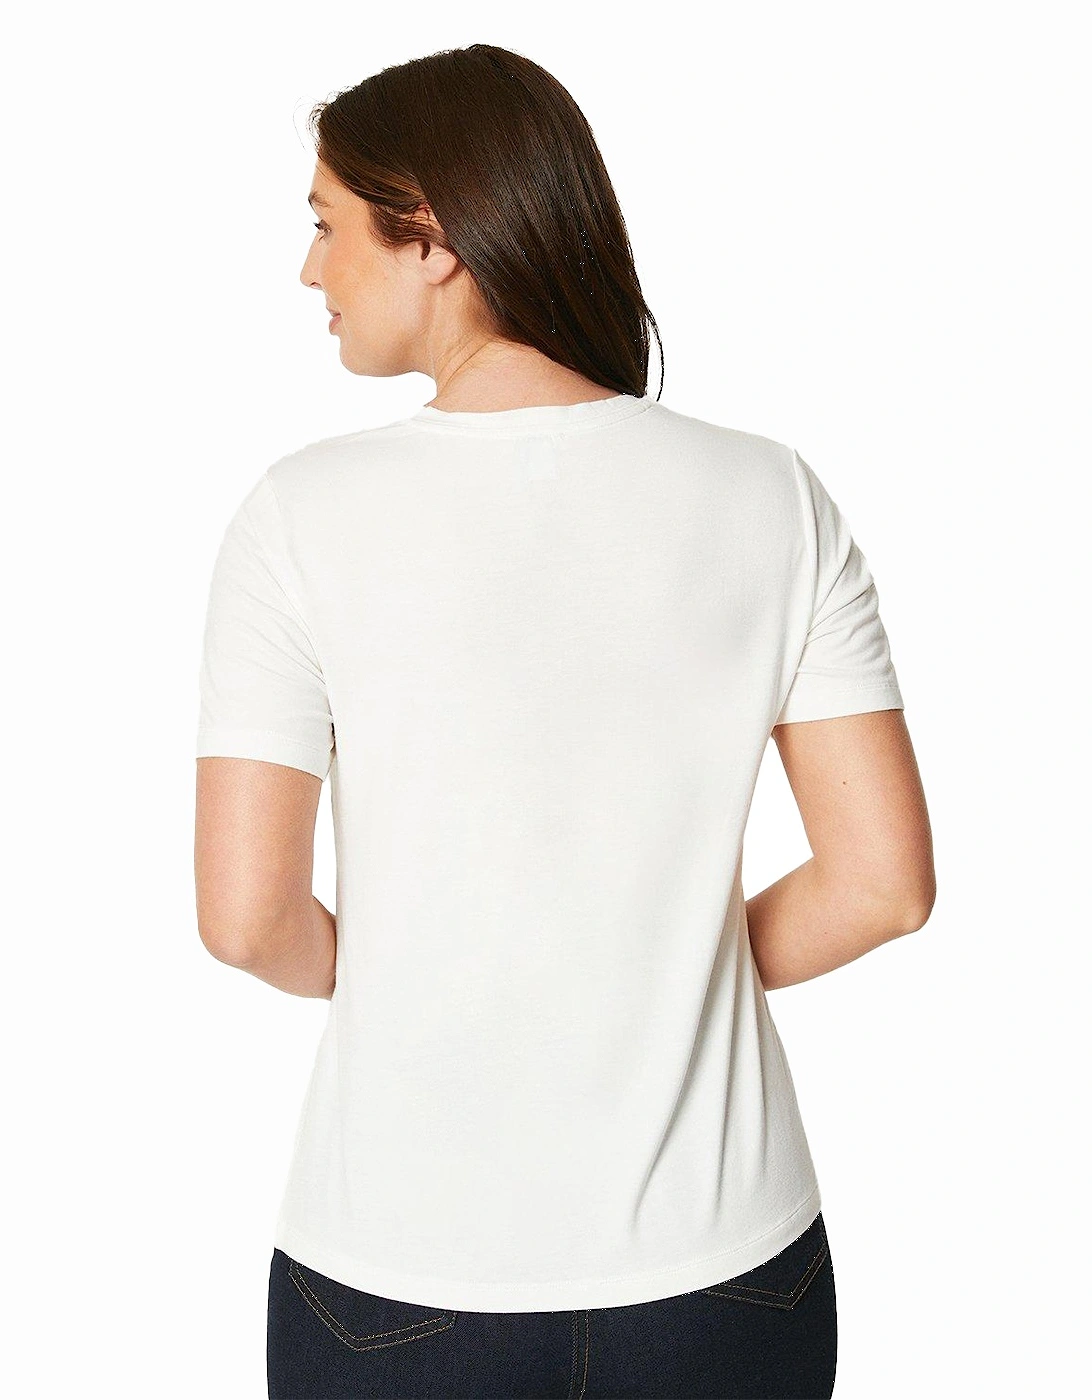 Womens/Ladies Modal V Neck T-Shirt